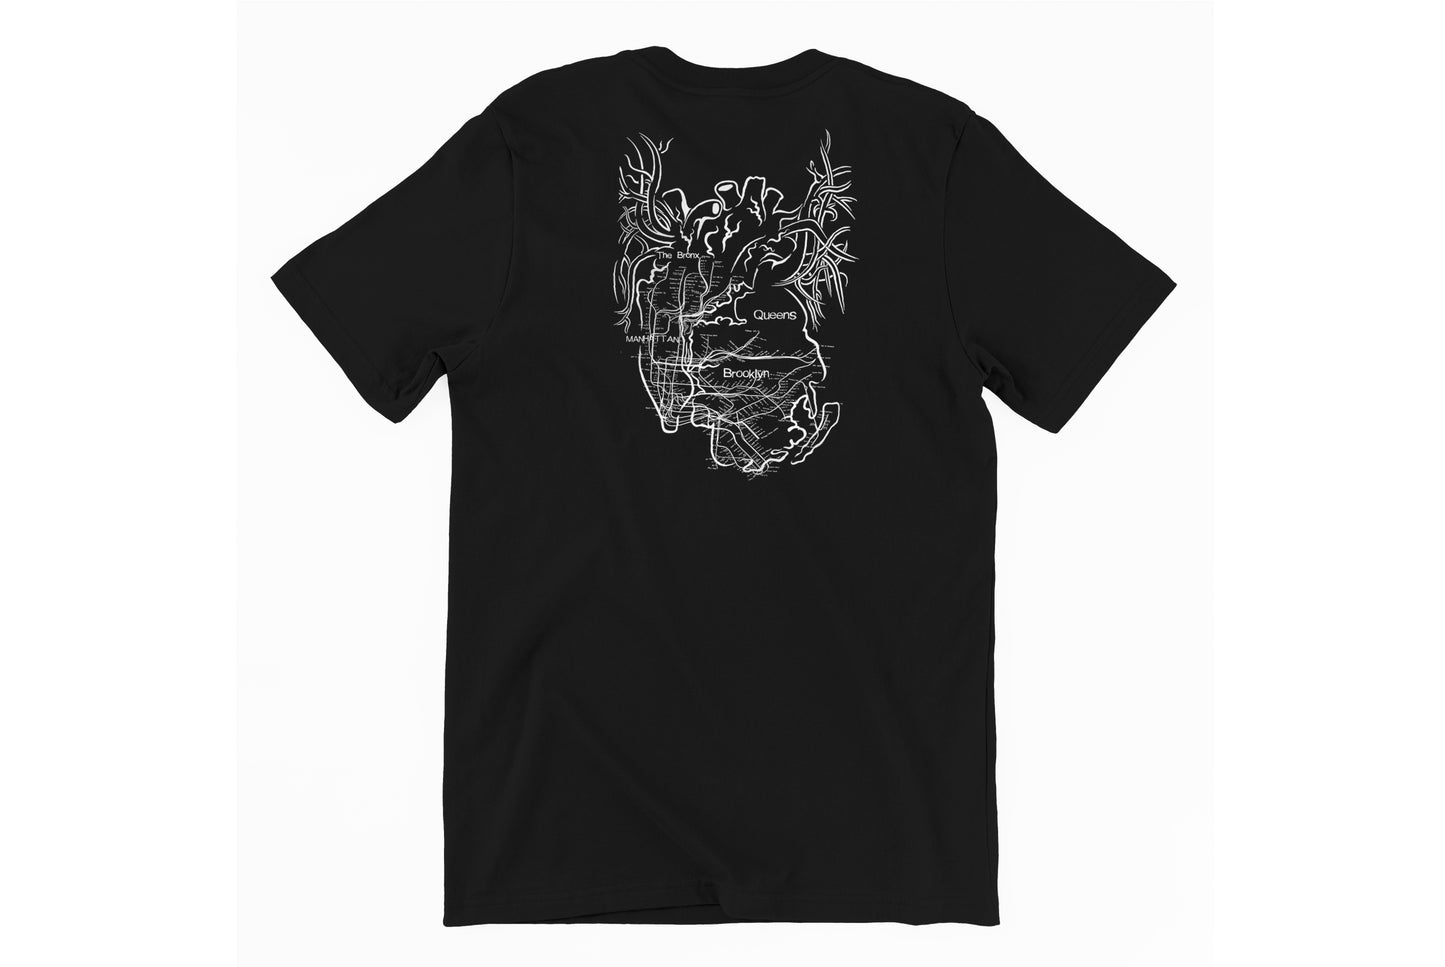 Arteries Silk Screen on Black T-Shirt